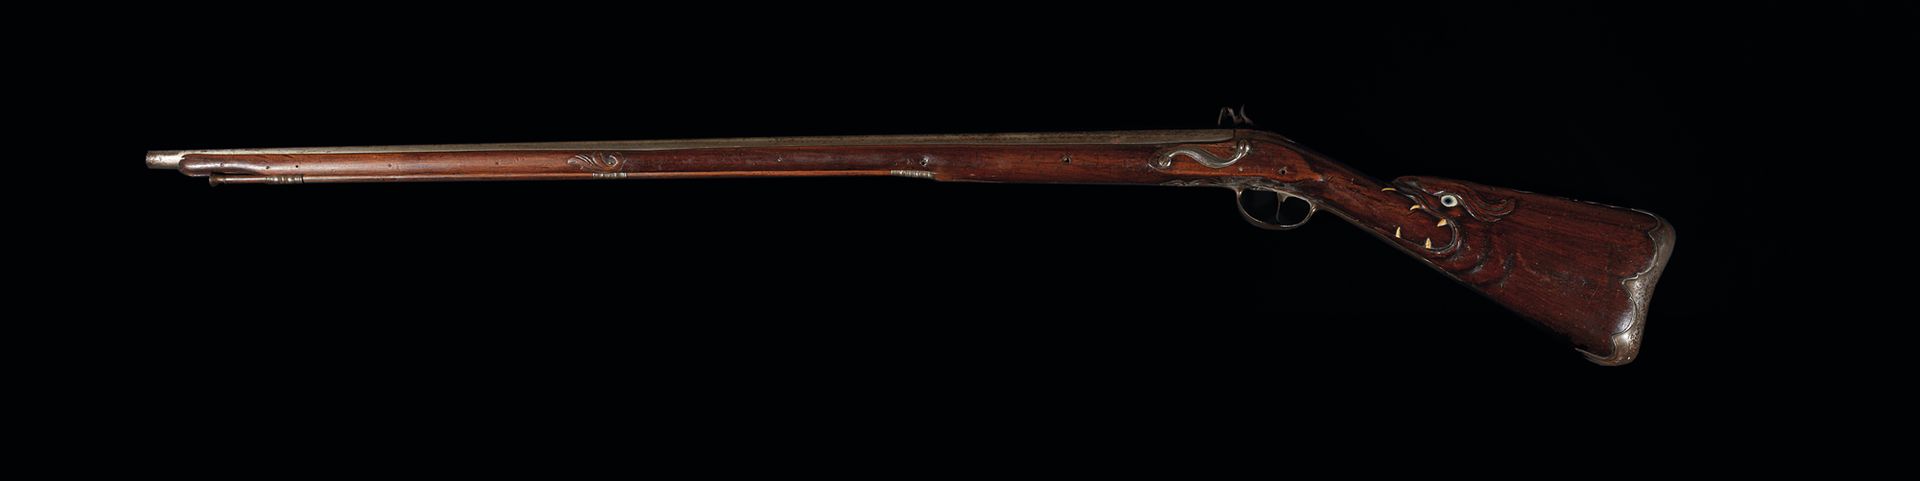 Null 燧发枪狩猎步枪
平锁枪管，铁制配件，胡桃木枪托上有奇妙的动物装饰
18世纪
长130厘米